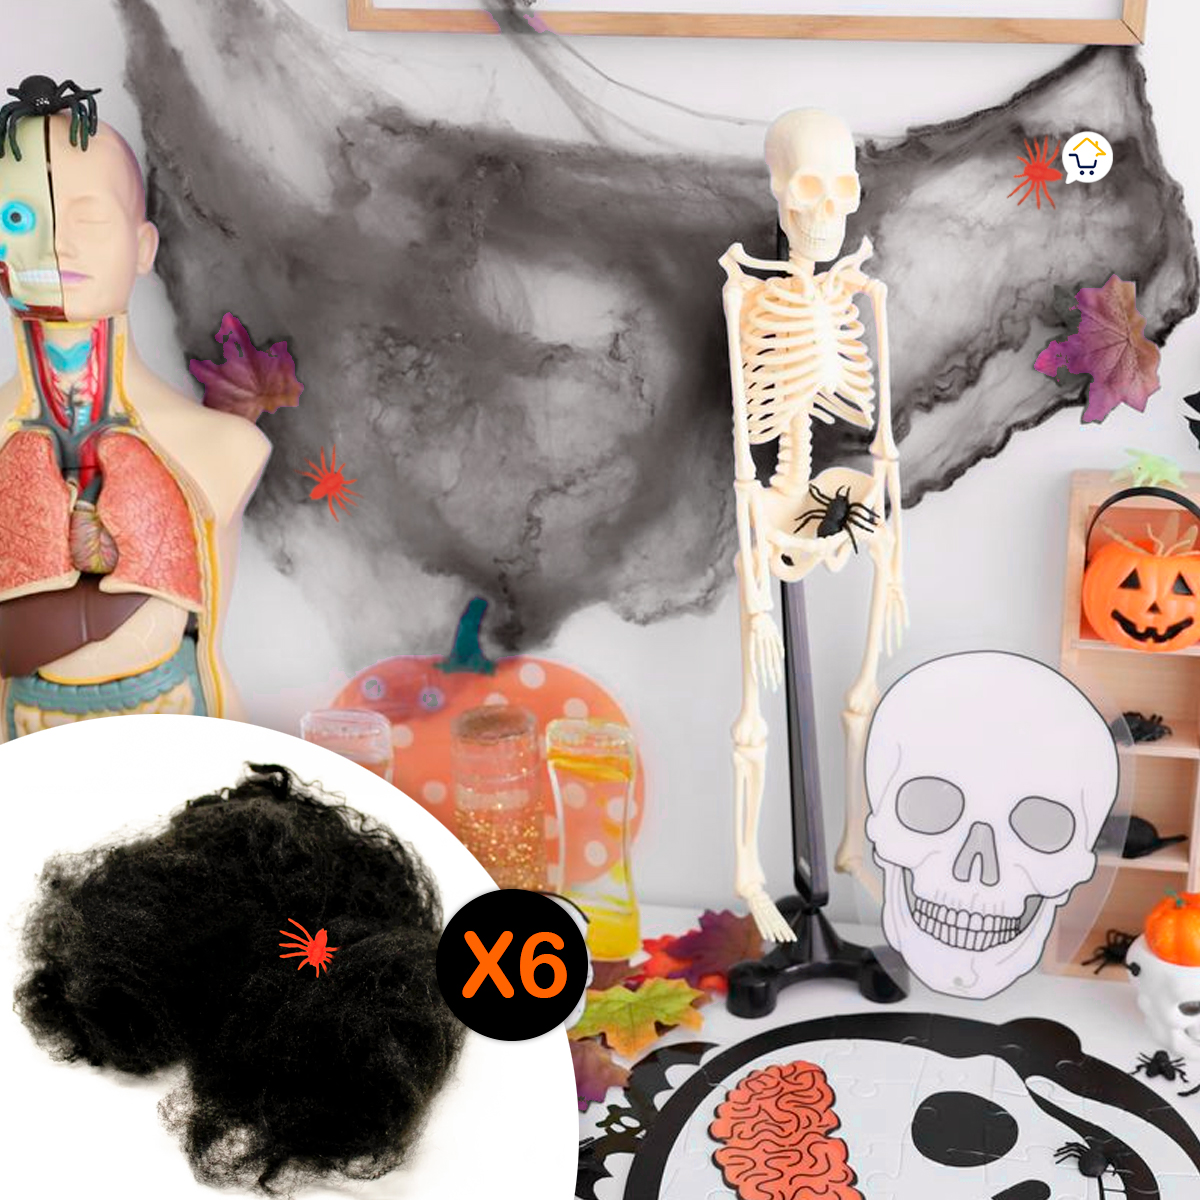  Telaraña Decorativa X6 Arañas Fiesta Disfraces Halloween 4016